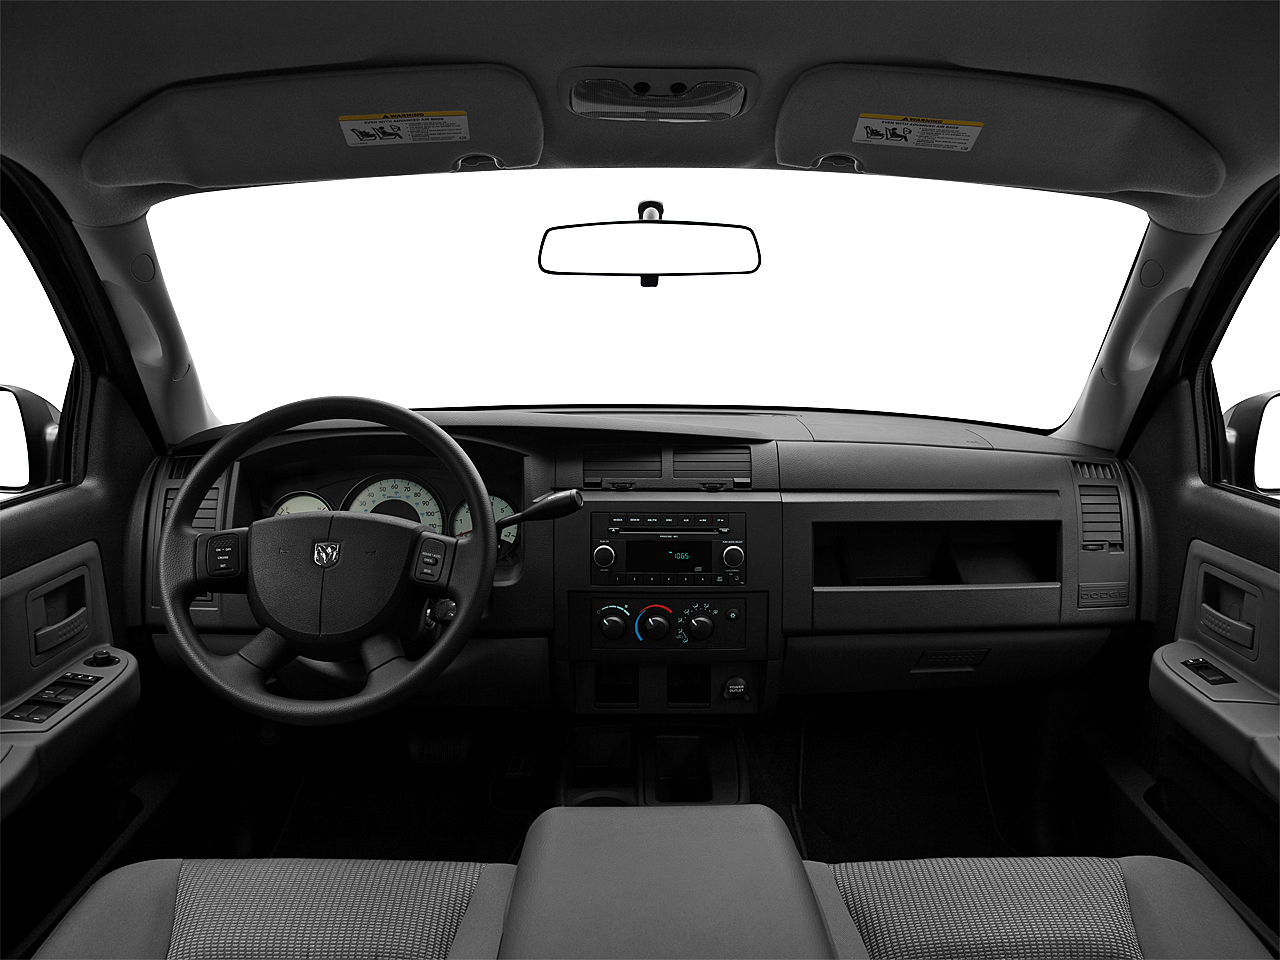 2011 Ram Dakota 4x4 ST 4dr Crew Cab - Research - GrooveCar